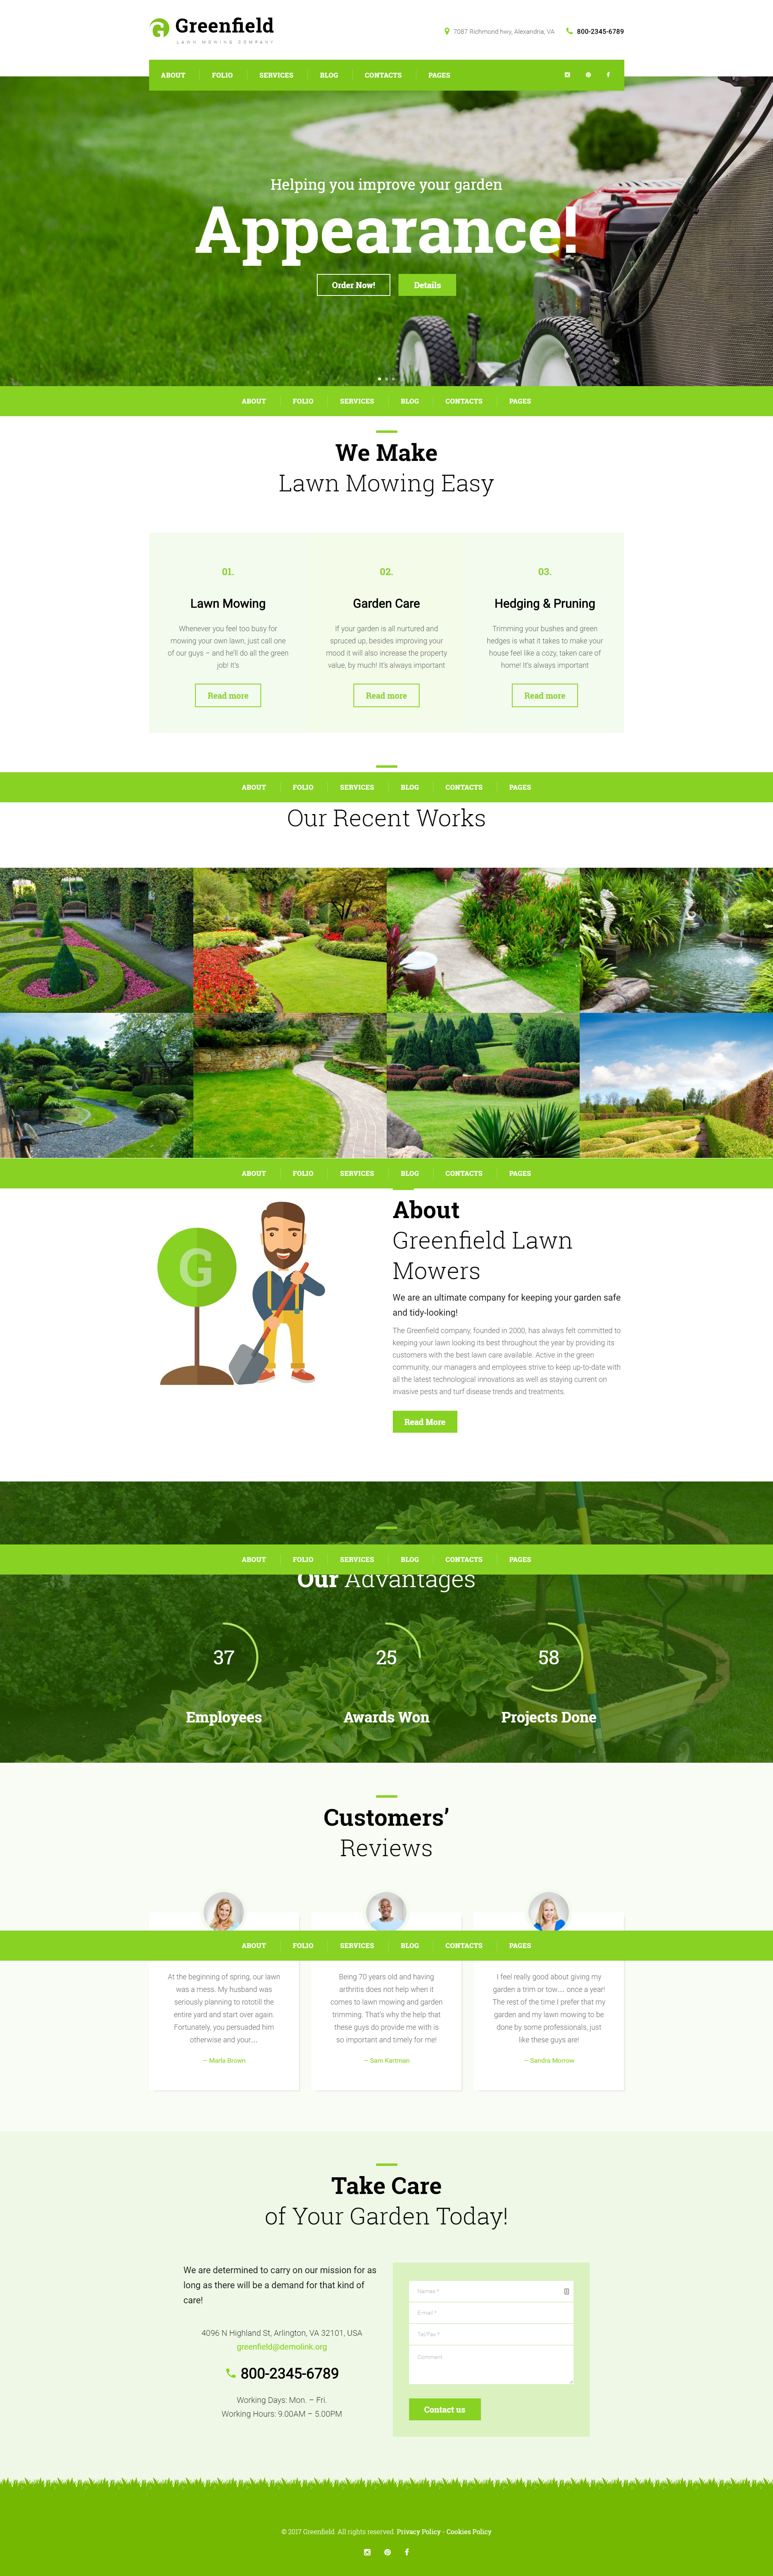 GreenField - Lawn Mowing Company Responsive WordPress Theme